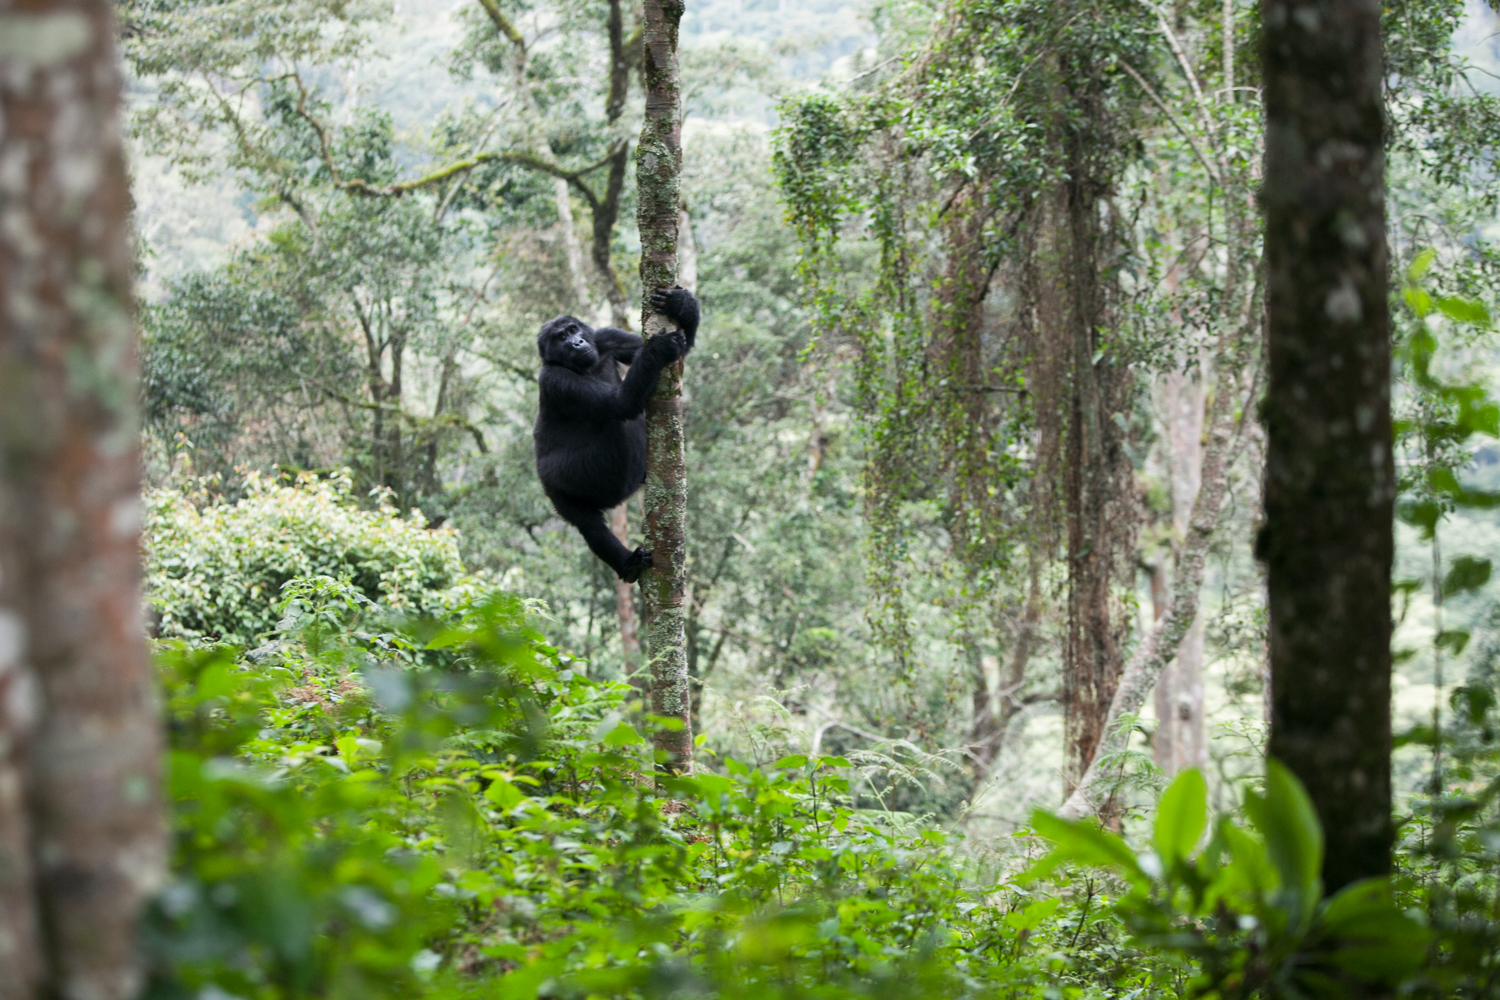 Eric Kruszewski photographs a mountain gorillas in Uganda’s Bwindi Impenetrable Forest.